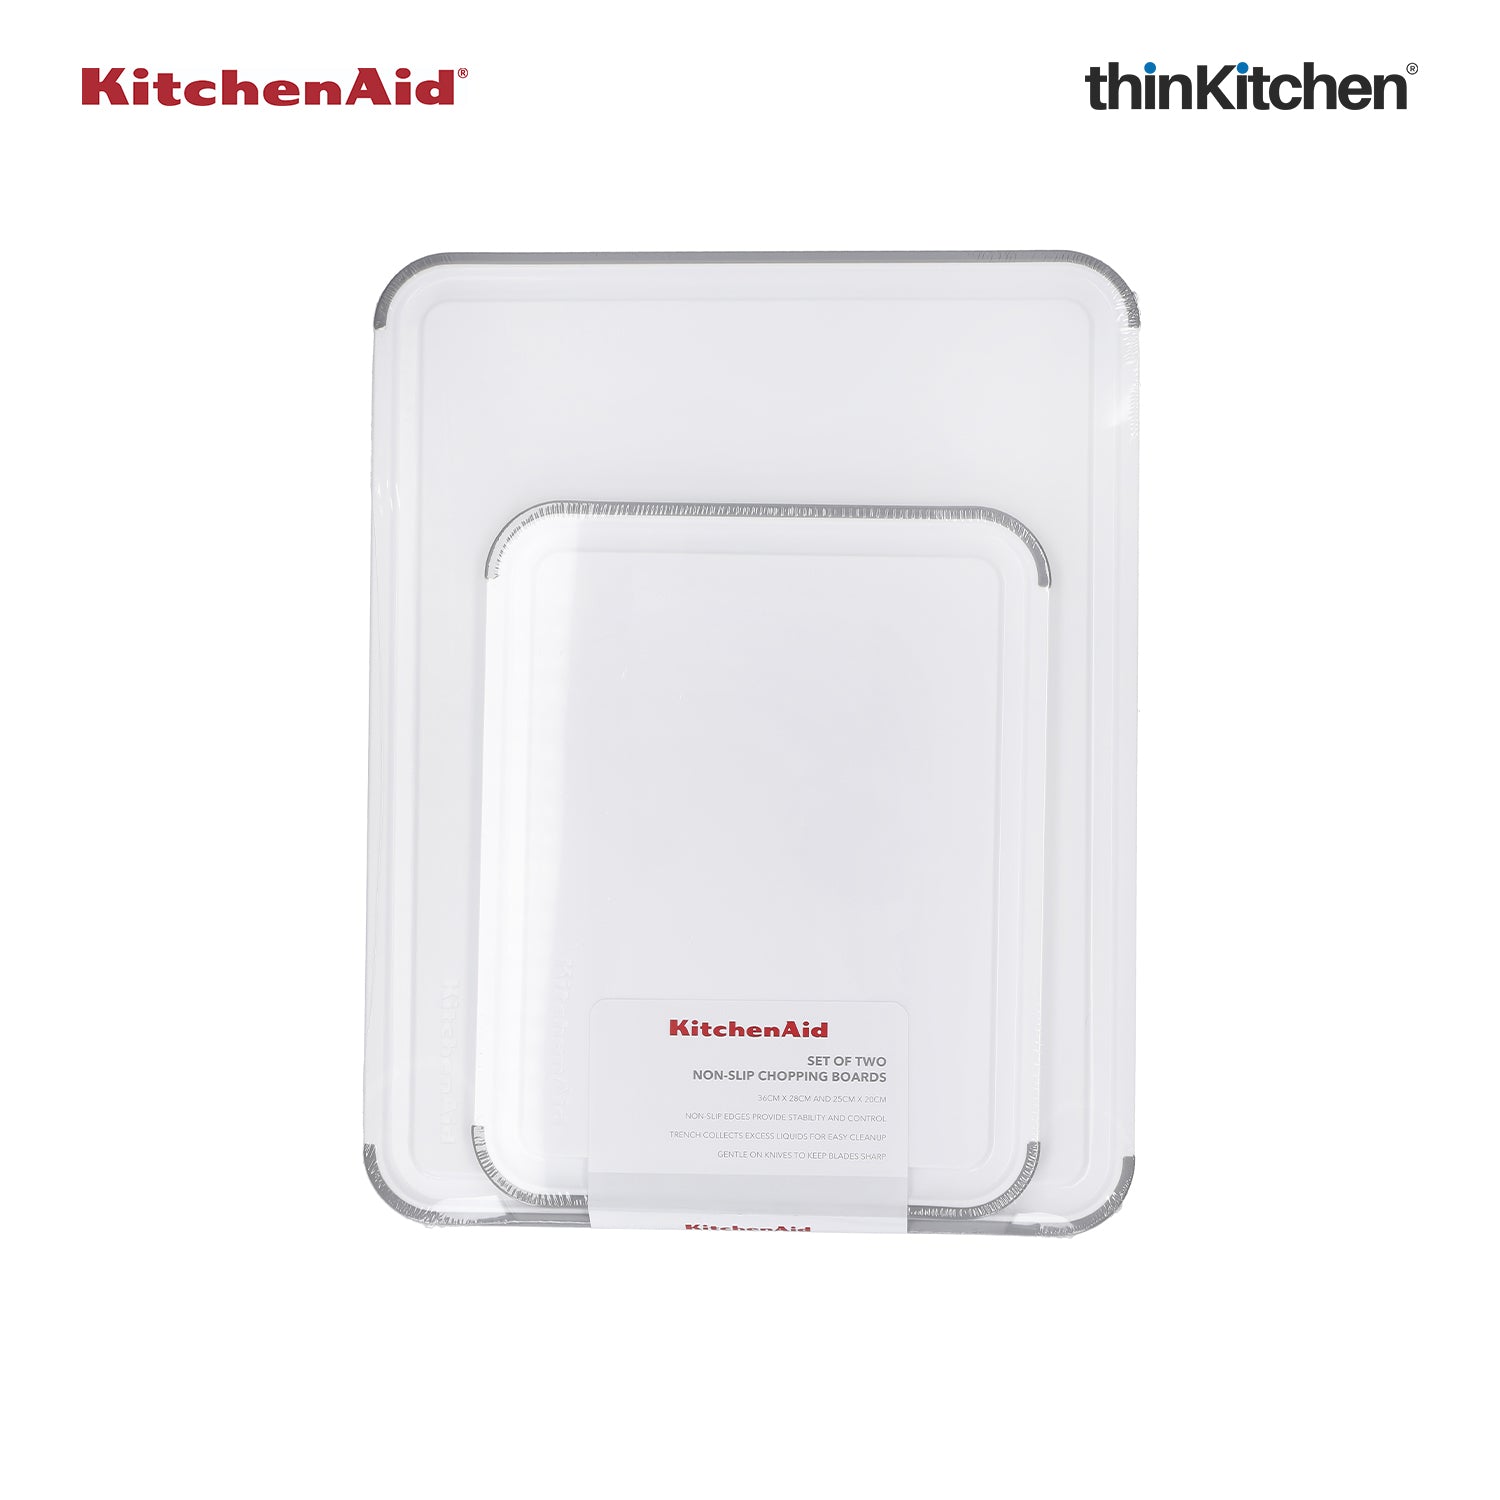  KitchenAid Classic Nonslip 2 Piece Plastic Cutting Board, Set  of 2, White: Home & Kitchen